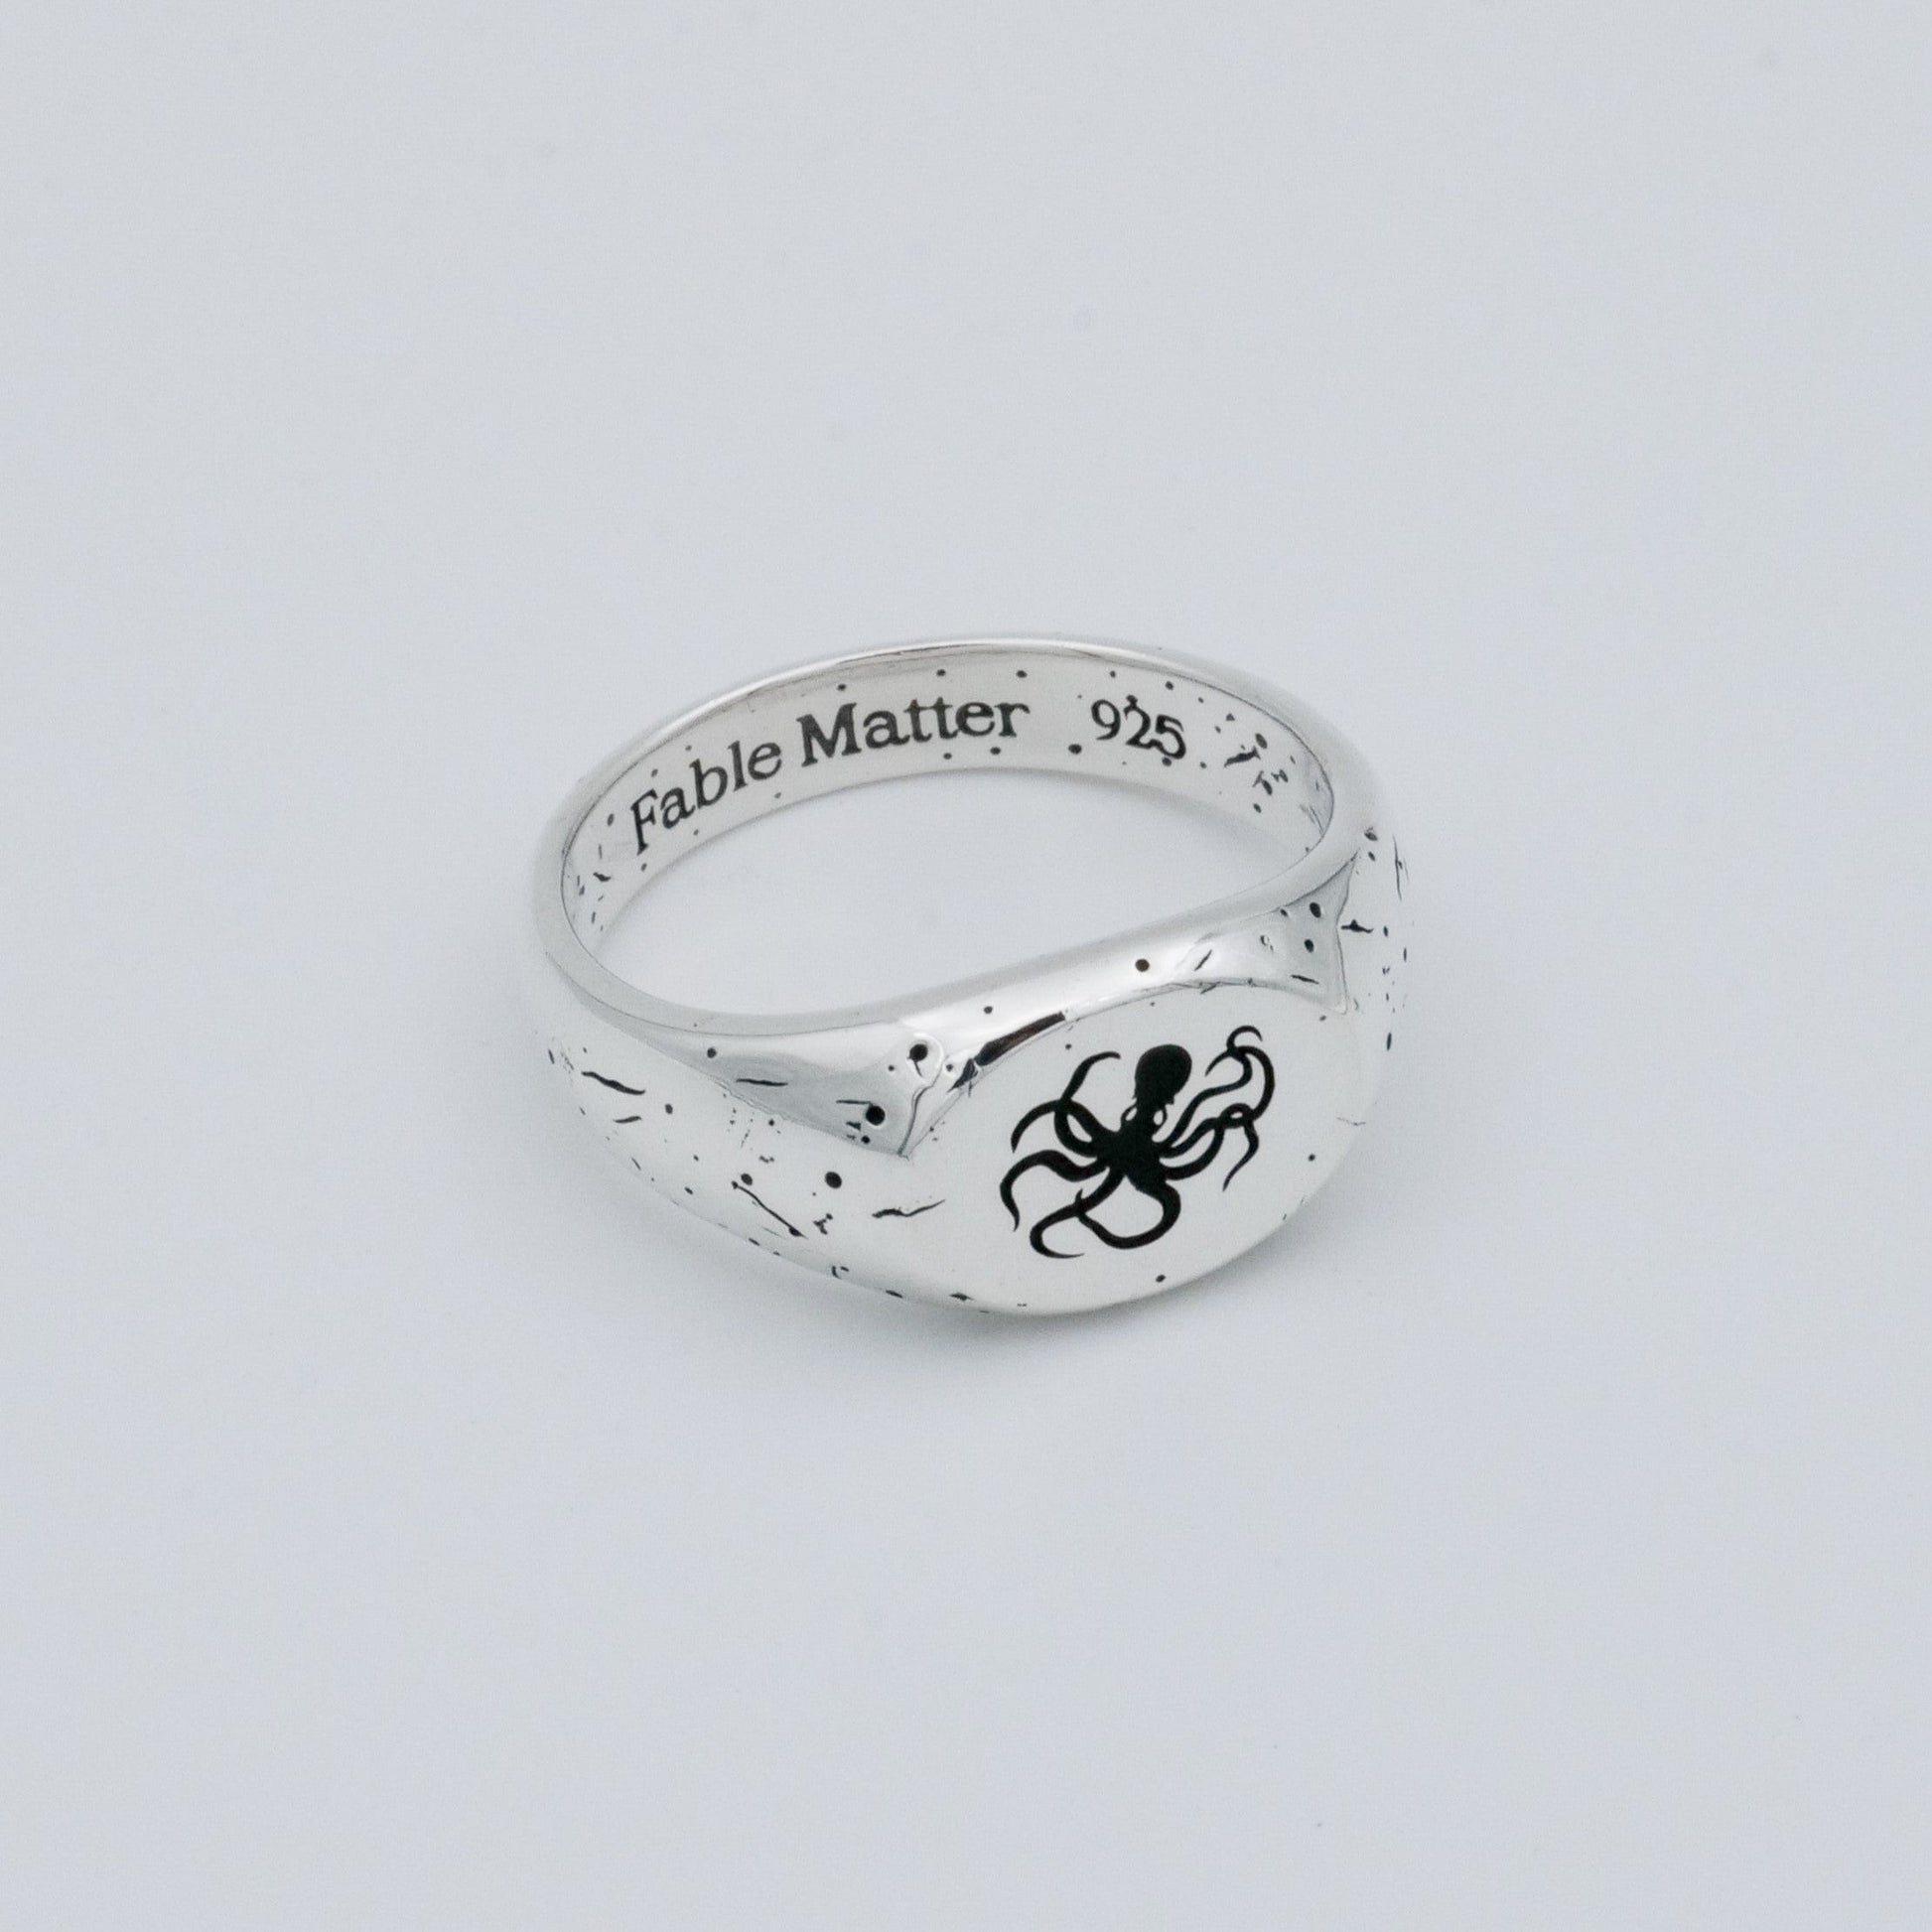 Recycled sterling silver signet ring. Kraken design.